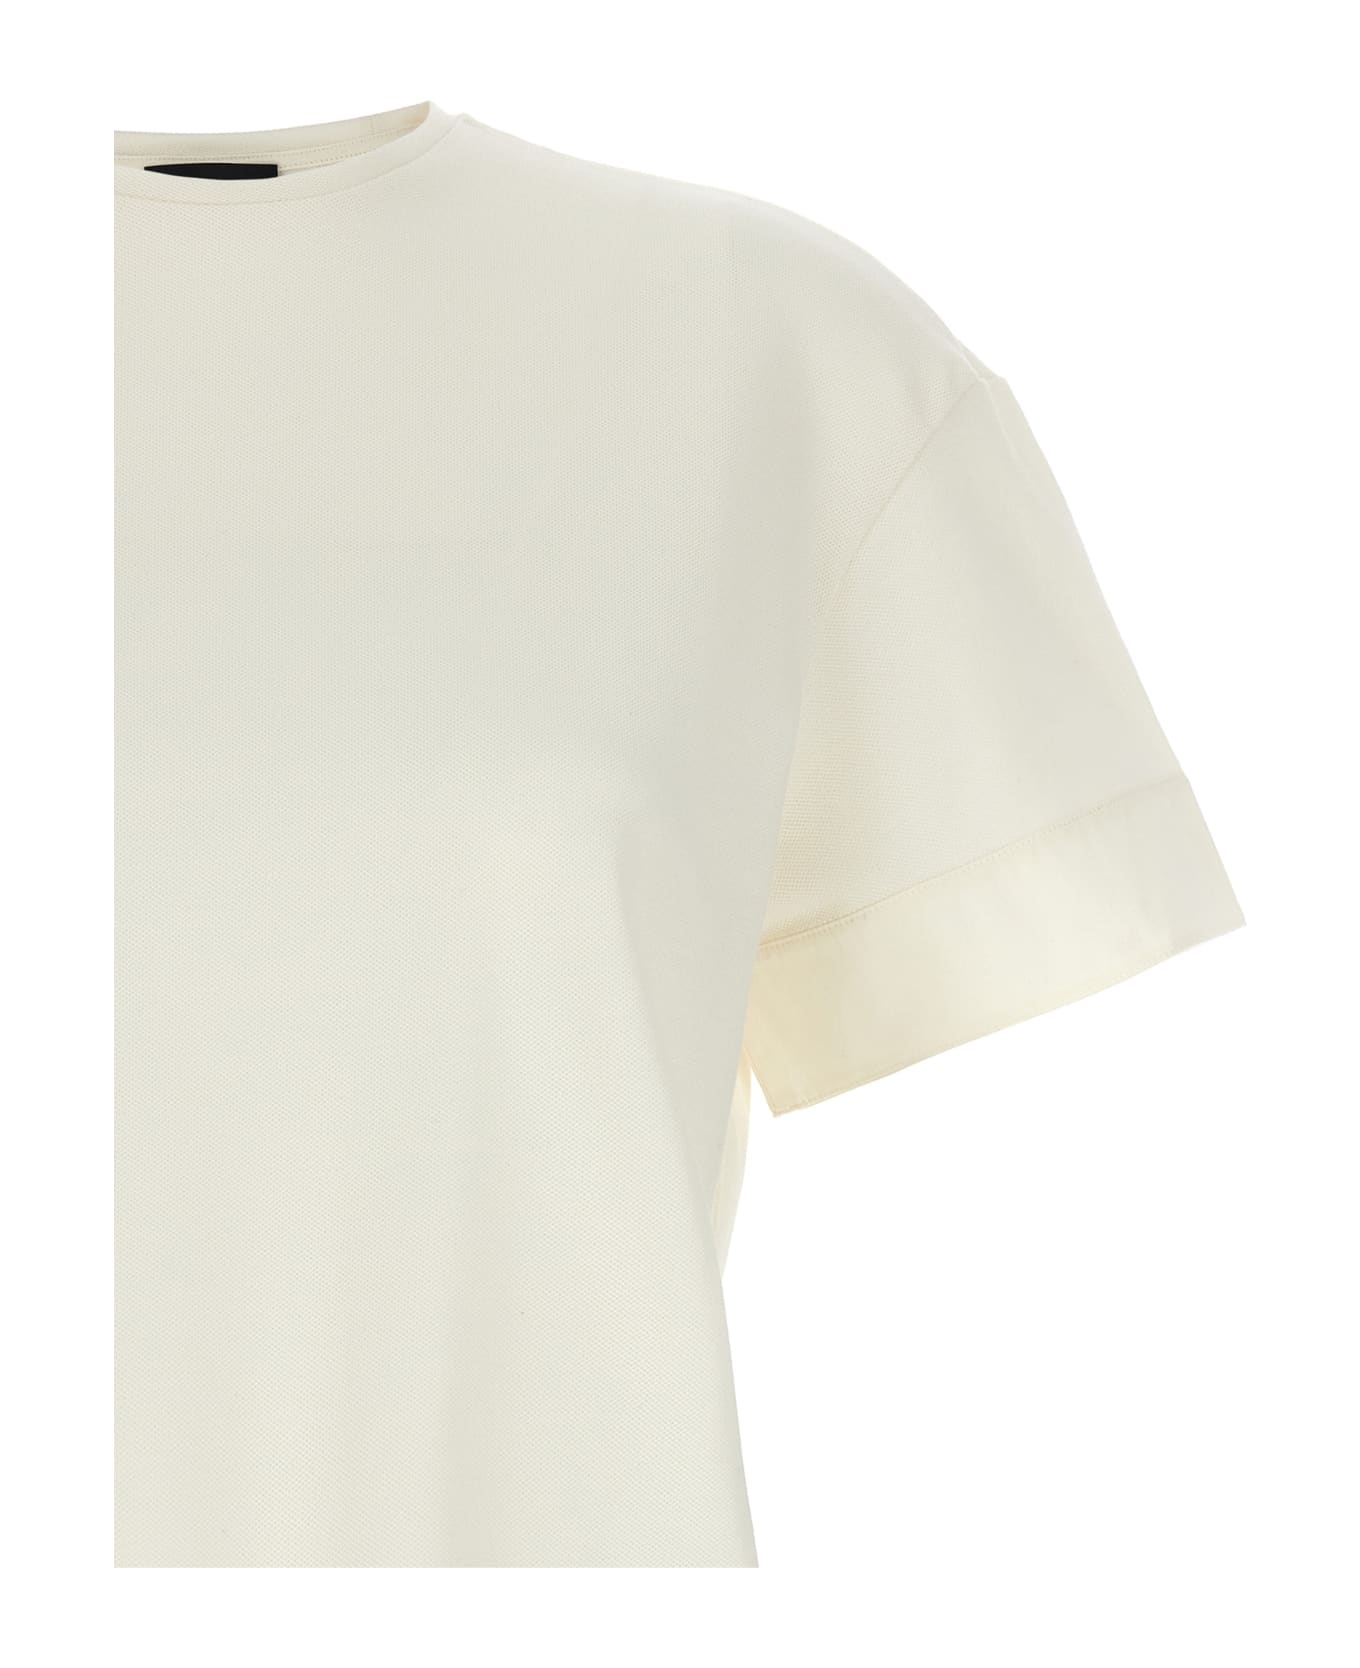 Theory Piqué Cotton Top - White Tシャツ